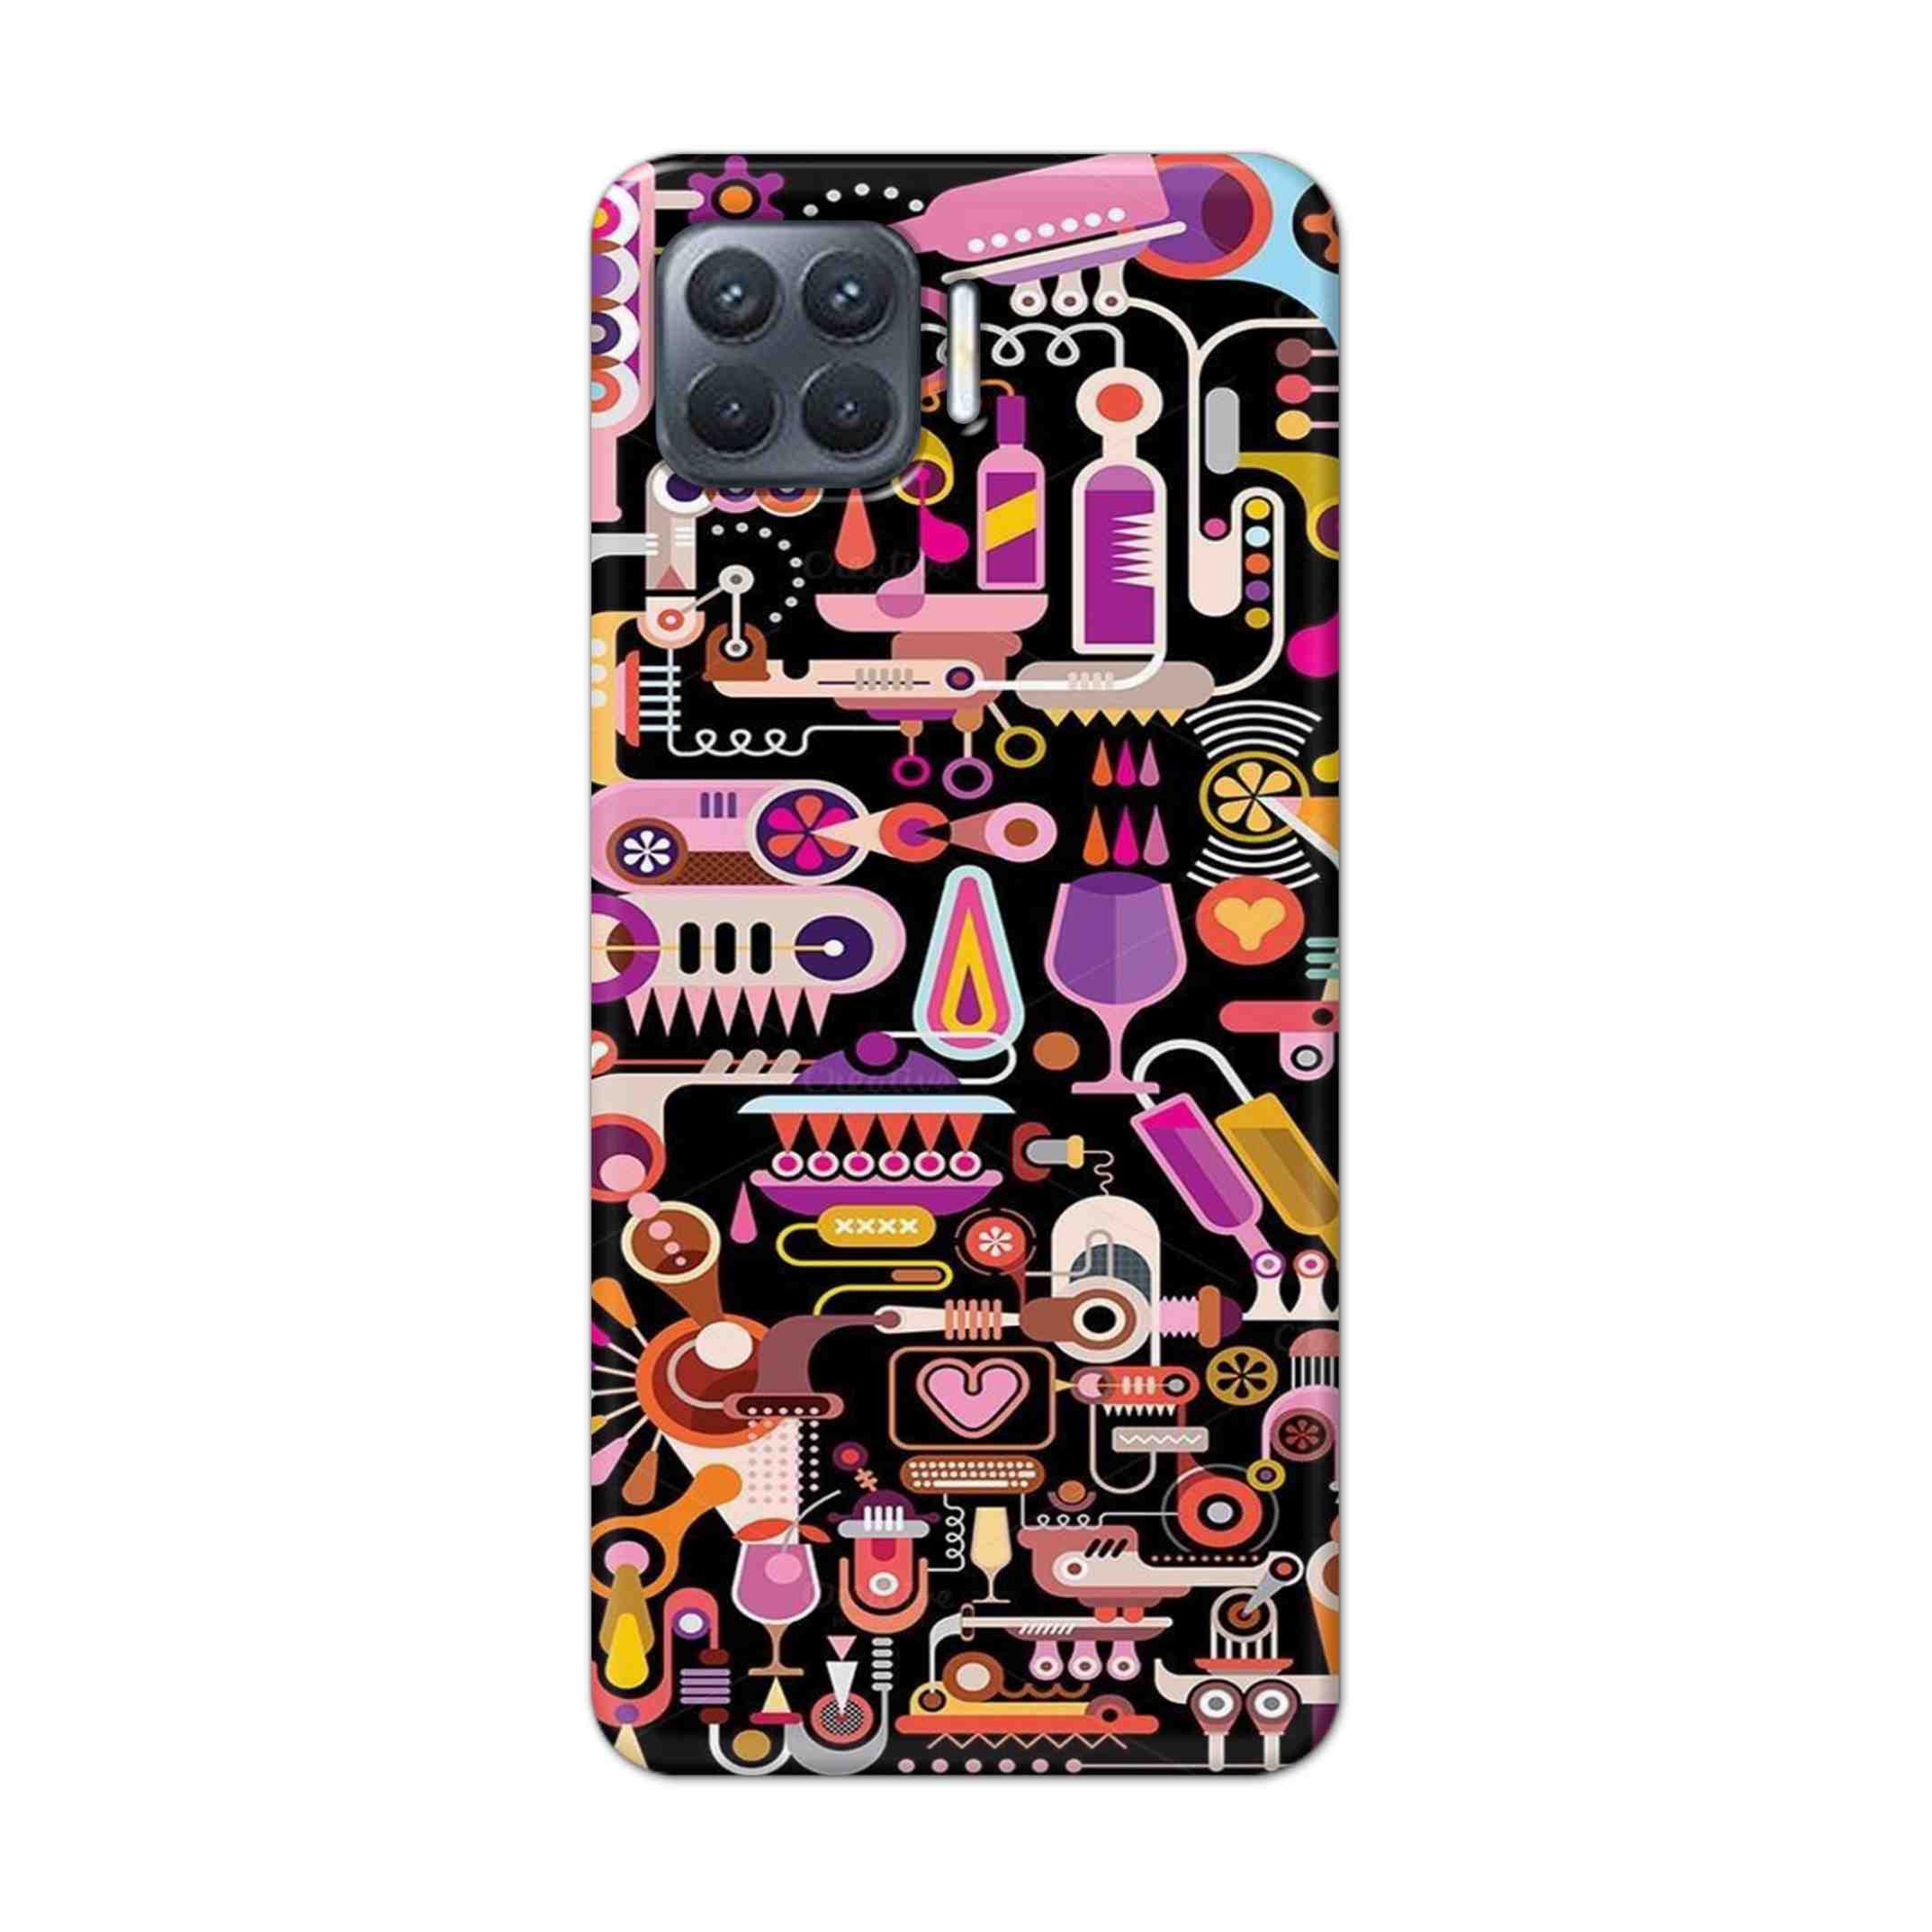 Buy Lab Art Hard Back Mobile Phone Case Cover For Oppo F17 Pro Online